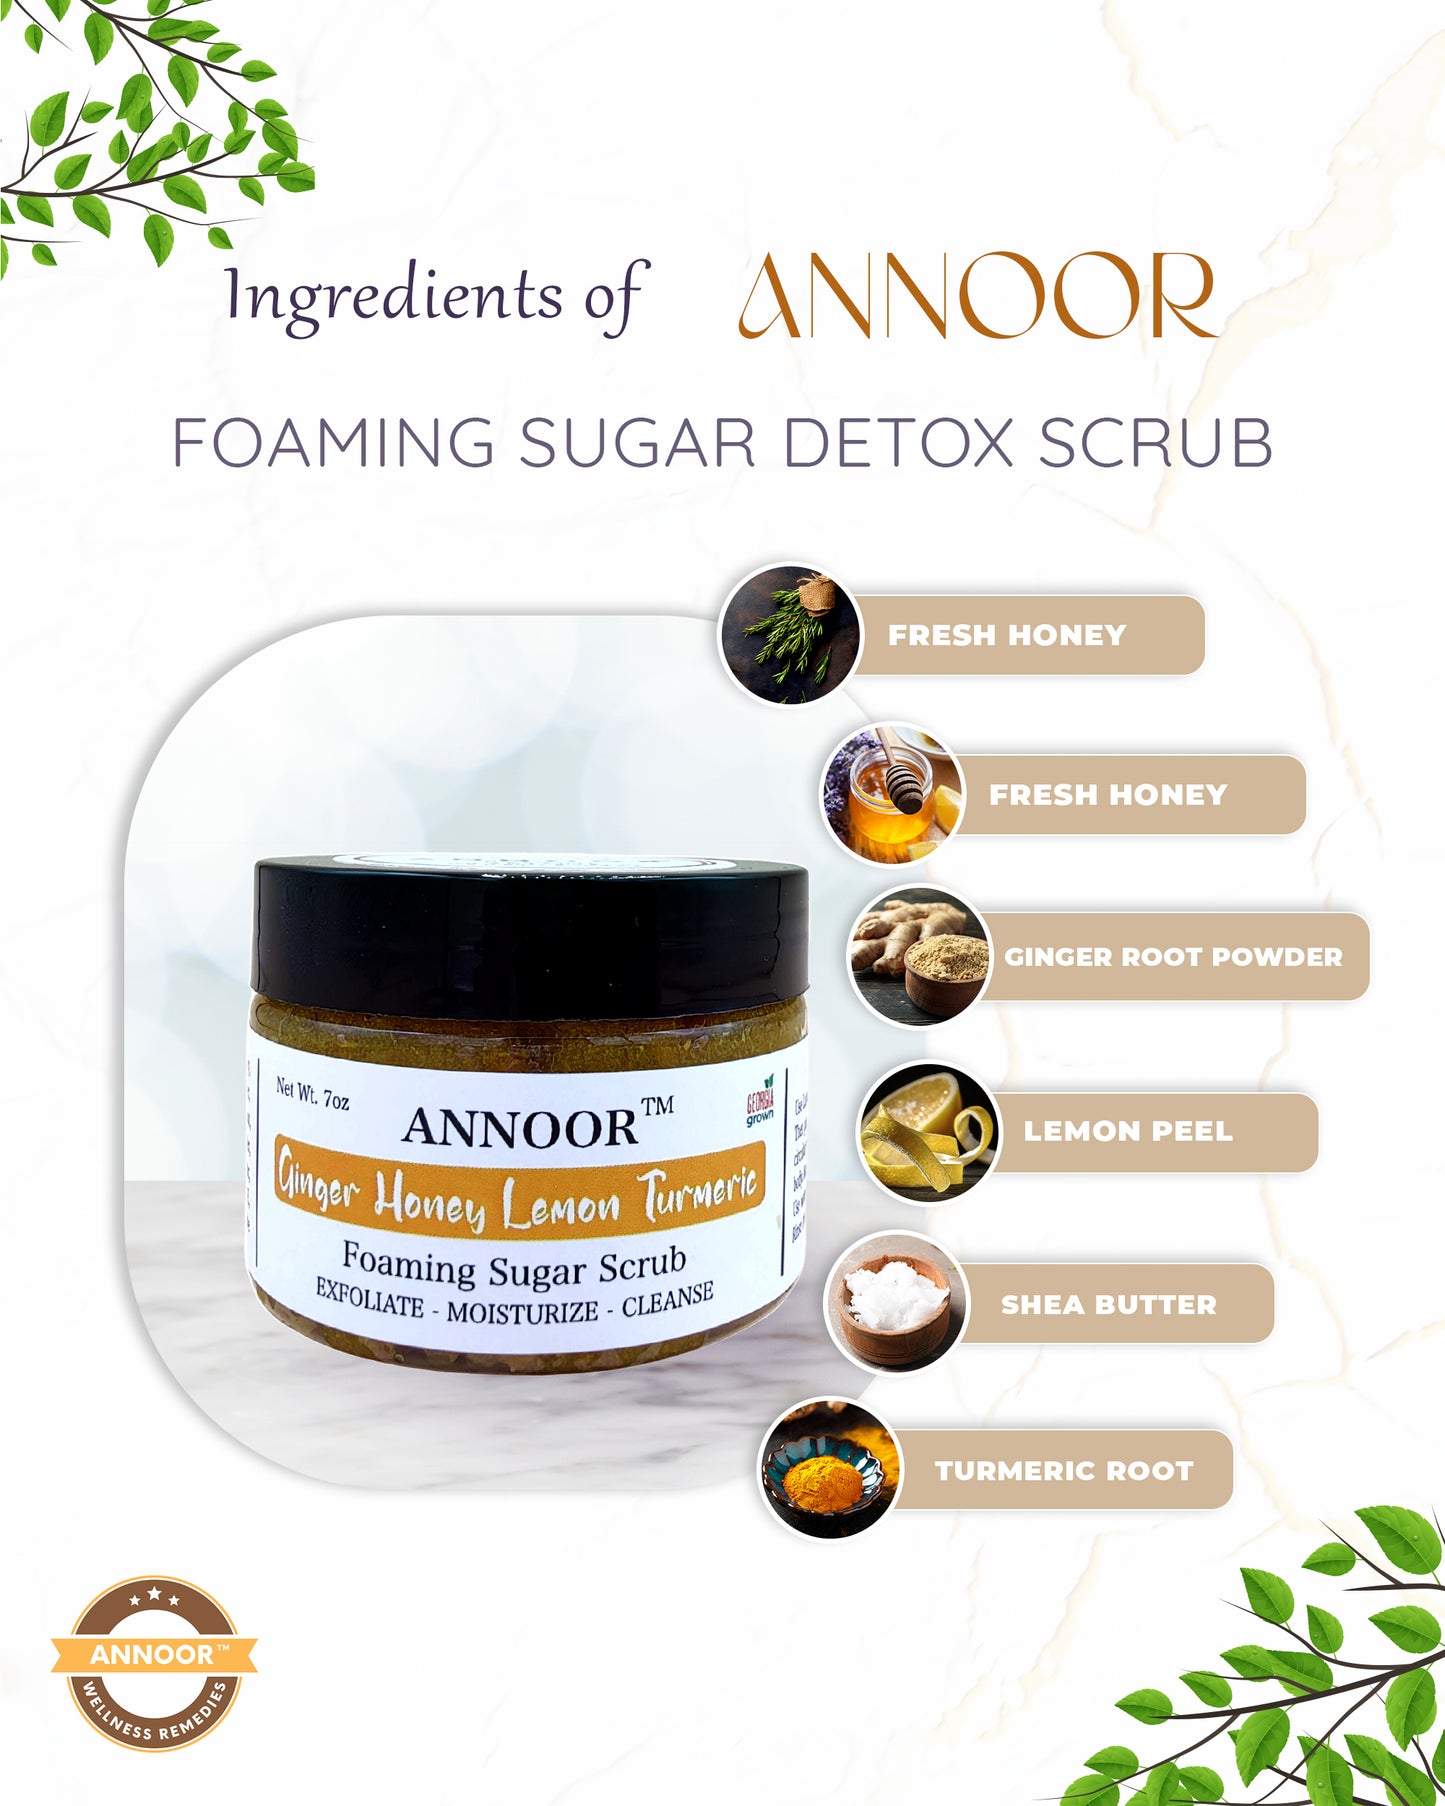 Foaming Sugar Scrub by Annoor - 7 Oz|Ginger, Honey, Lemon, Turmeric |No Parabens, Sulphates, No Harmful Chem |Face and Body Exfoliating